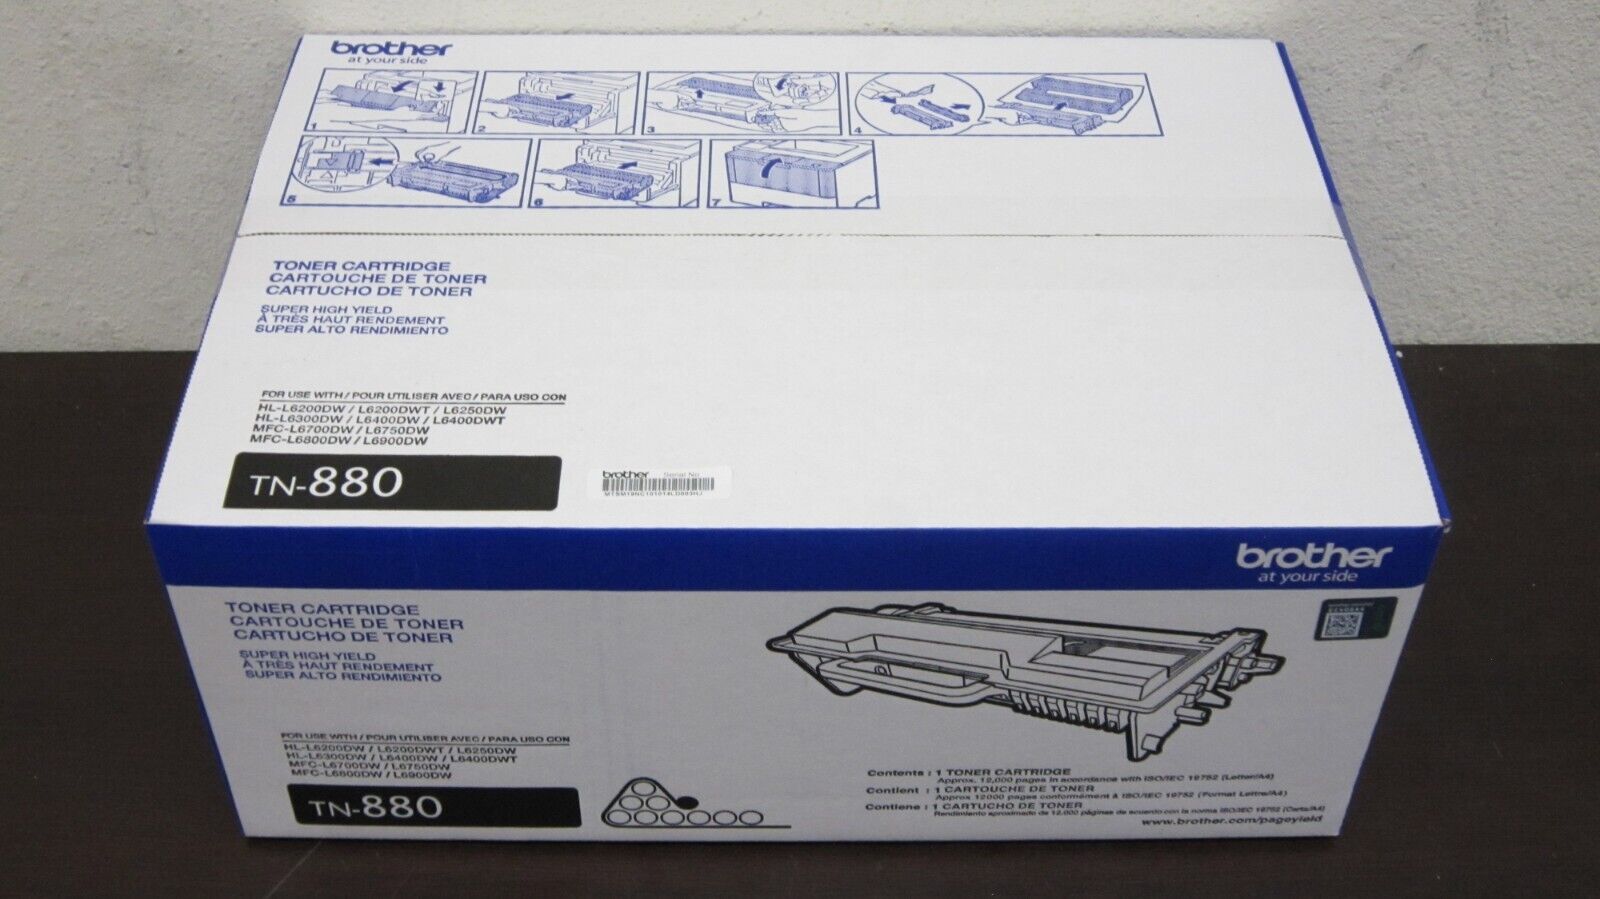 Genuine OEM Brother TN-880 Black Toner Cartridge MFC-L6700DW NEW Sealed Box